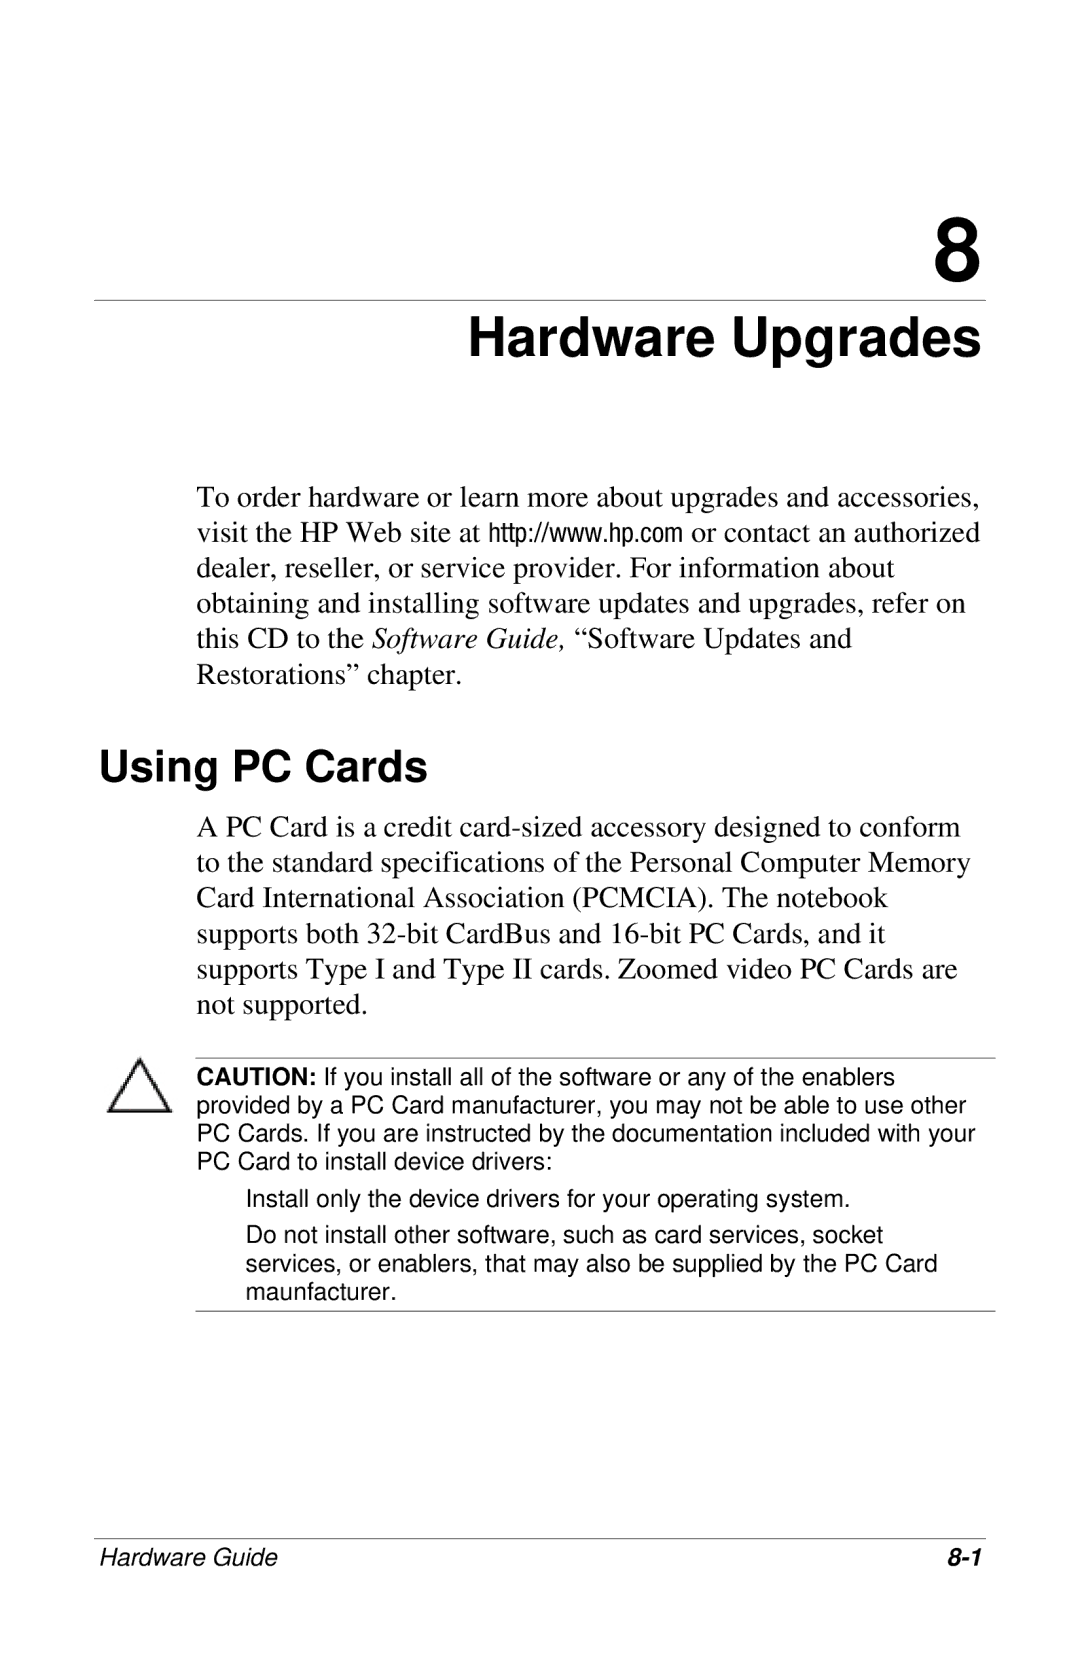 HP 309971-001 manual Hardware Upgrades, Using PC Cards 